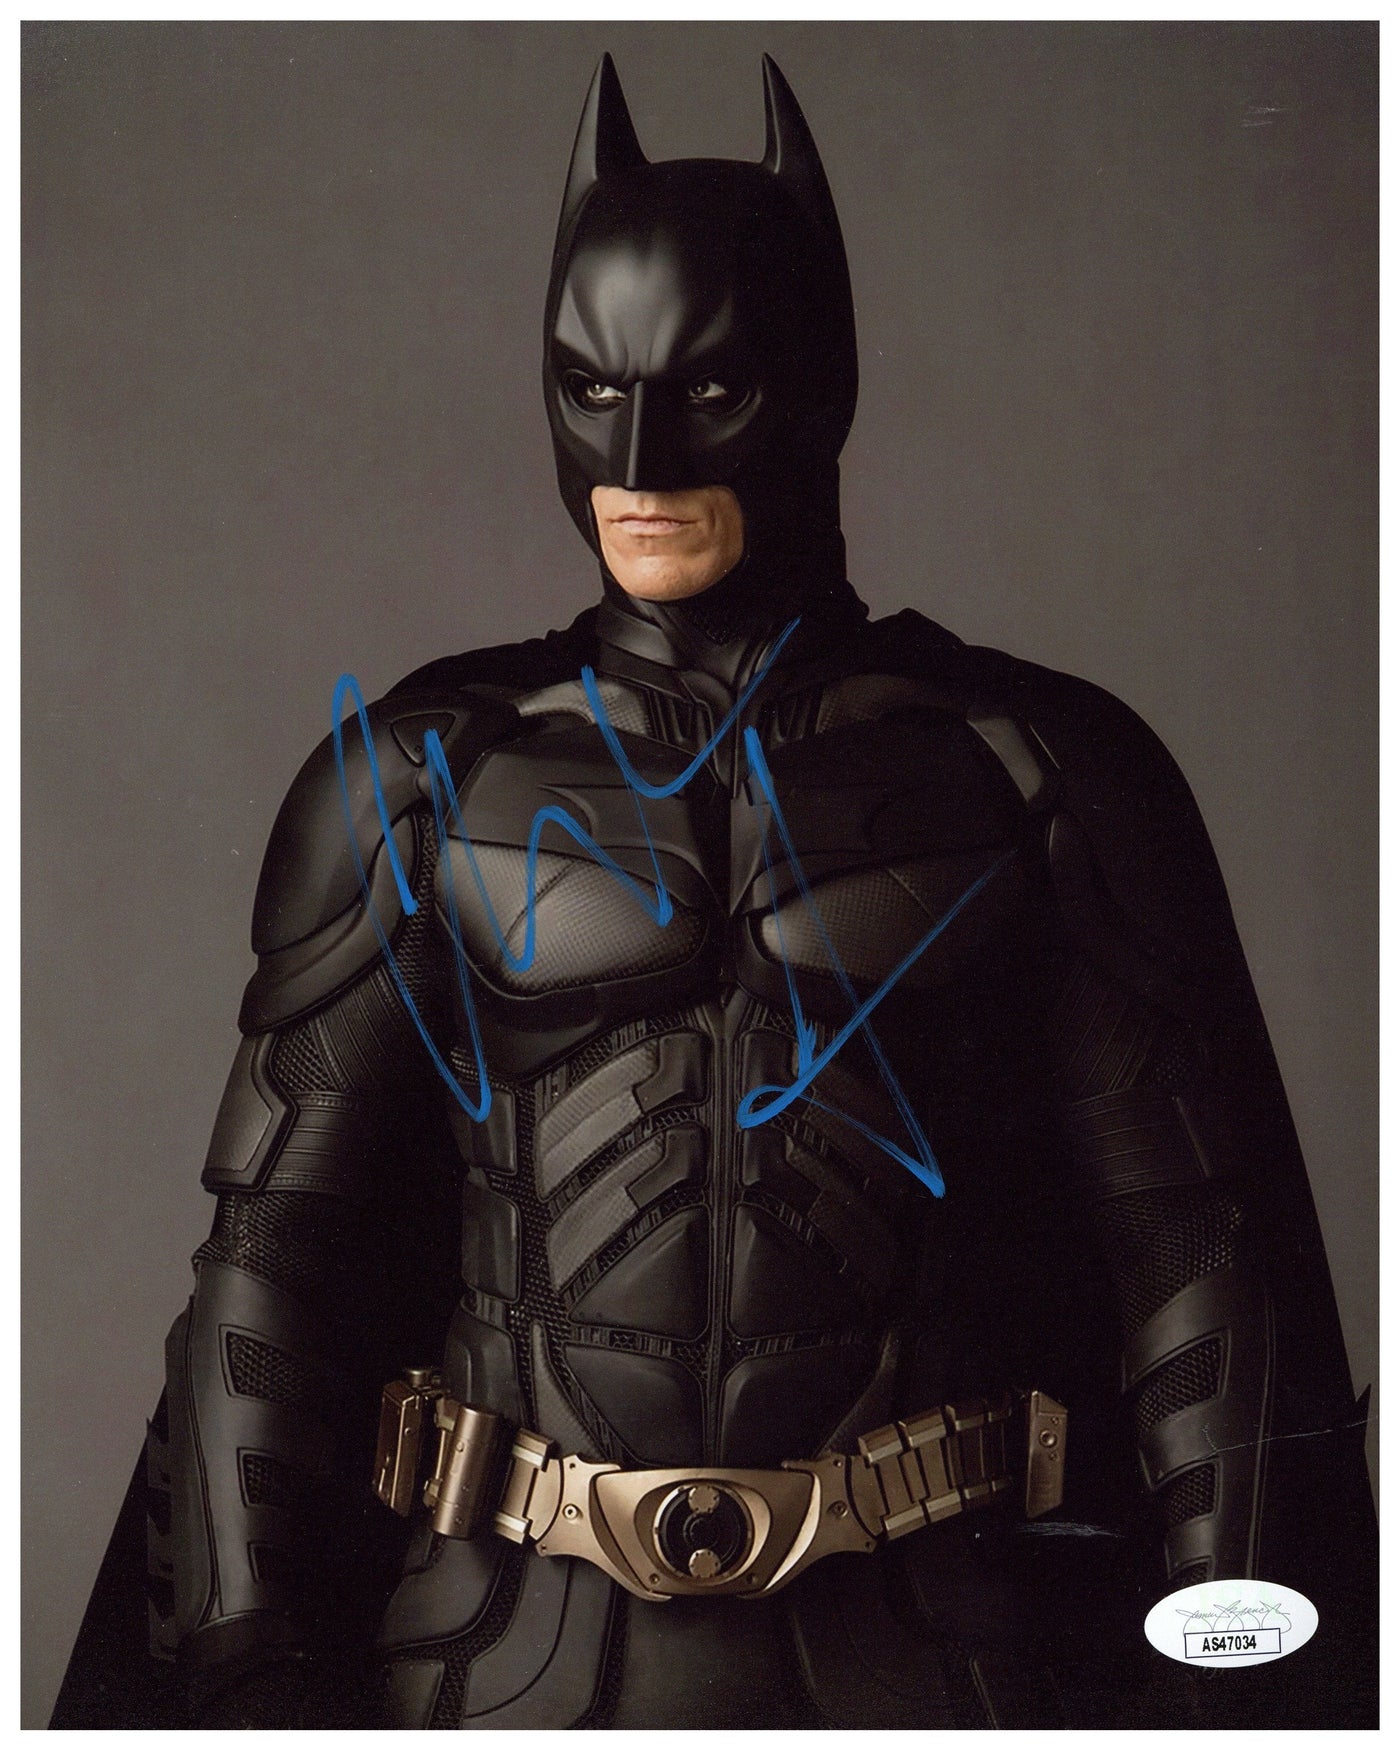 Christian Bale Signed 8x10 Photo The Dark Knight Batman Autographed JSA COA